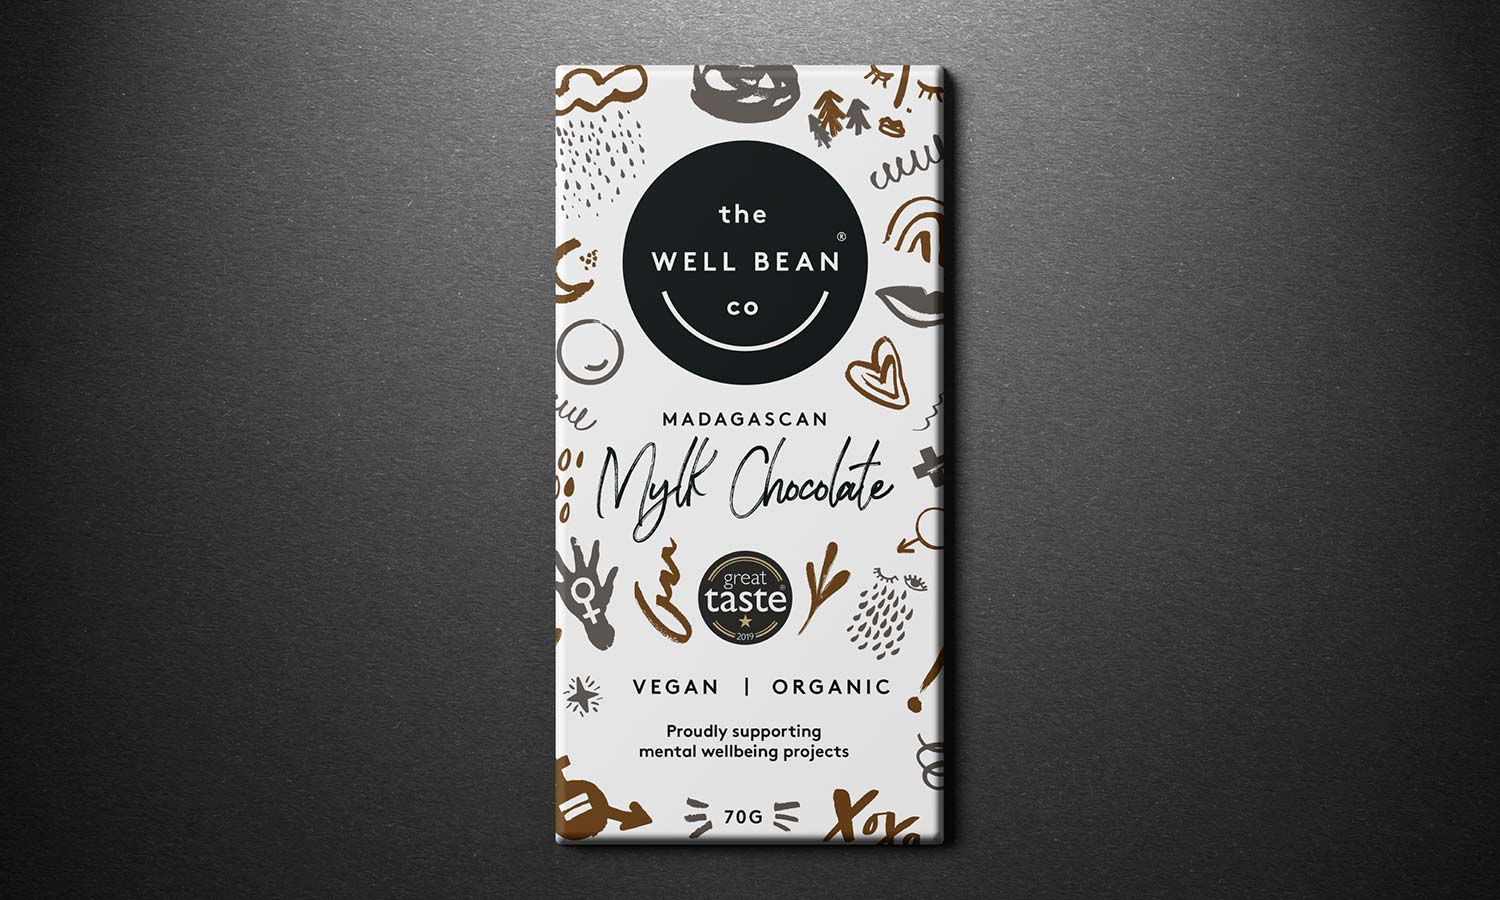 Vegan chocolate packaging